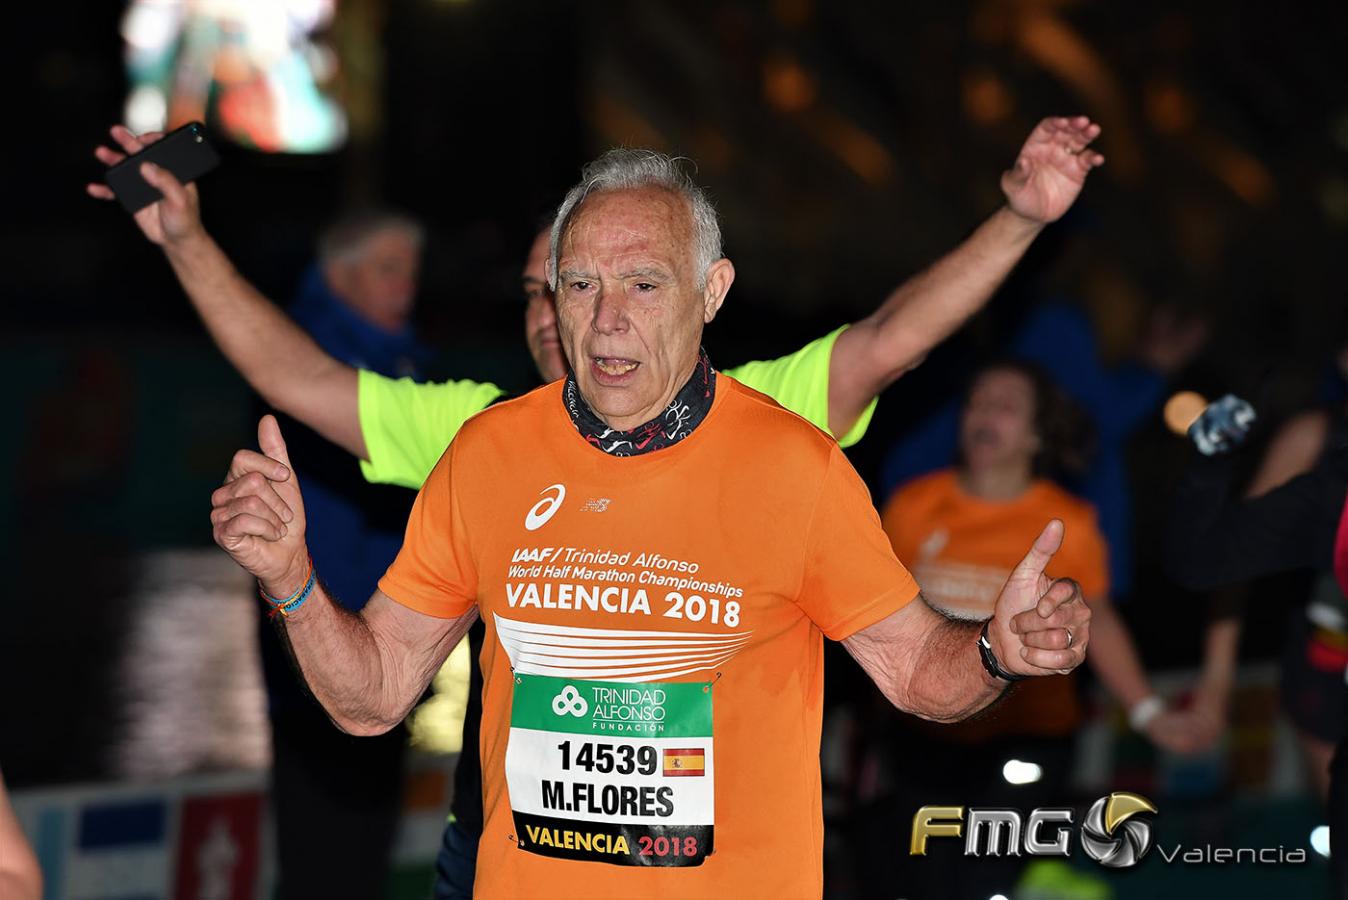 IAAF-Trinidad-Alfonso-World --Half-Marathon-Championships-Valencia-2018.-fmgvalencia-fili-navarrete(649)